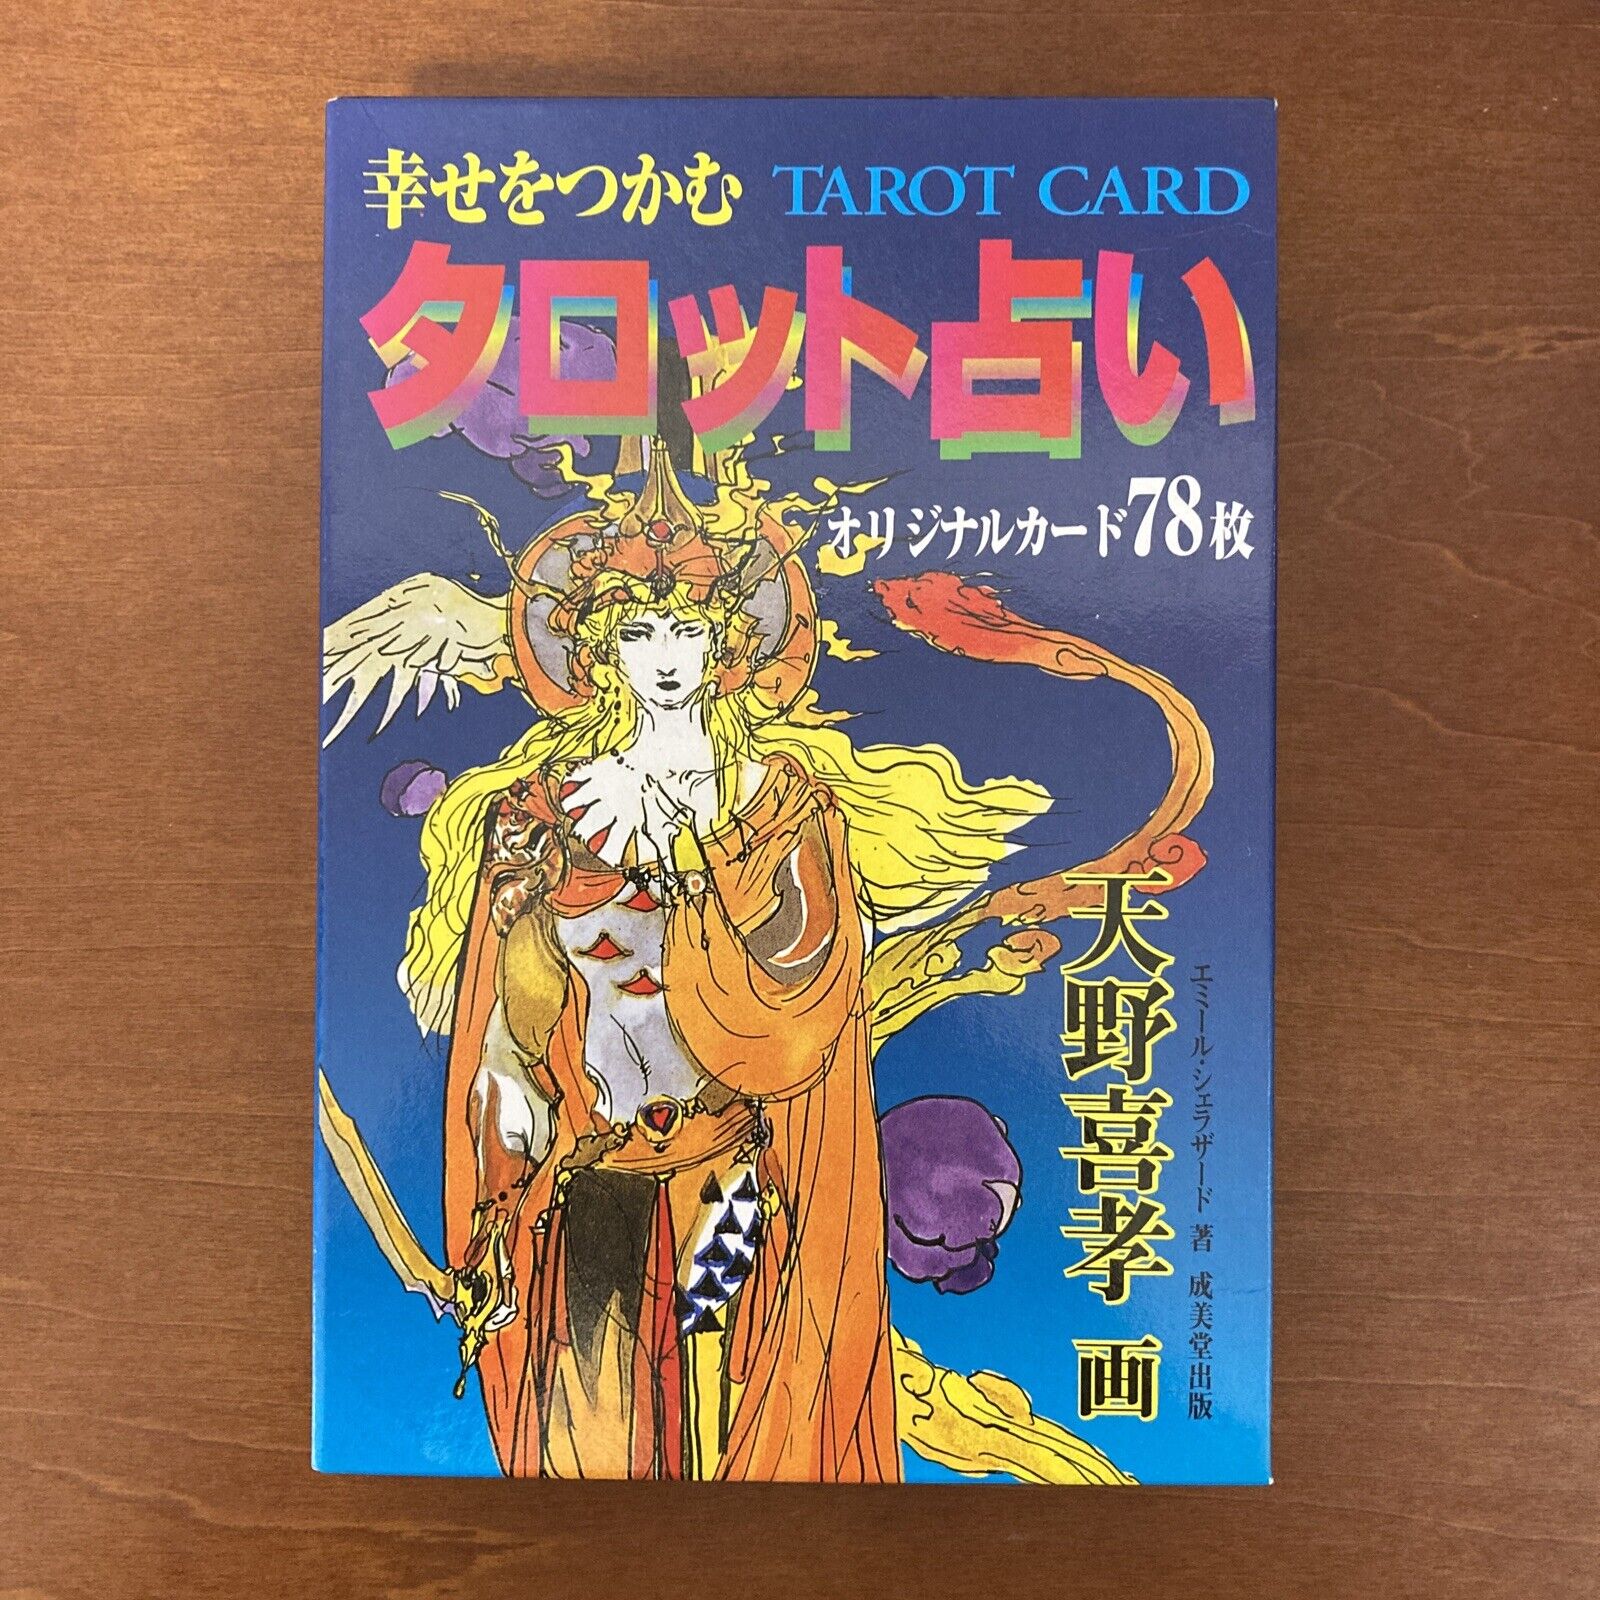 Yoshitaka Amano Tarot Deck 78 Cards and Art Book set 2002 edition Illustration